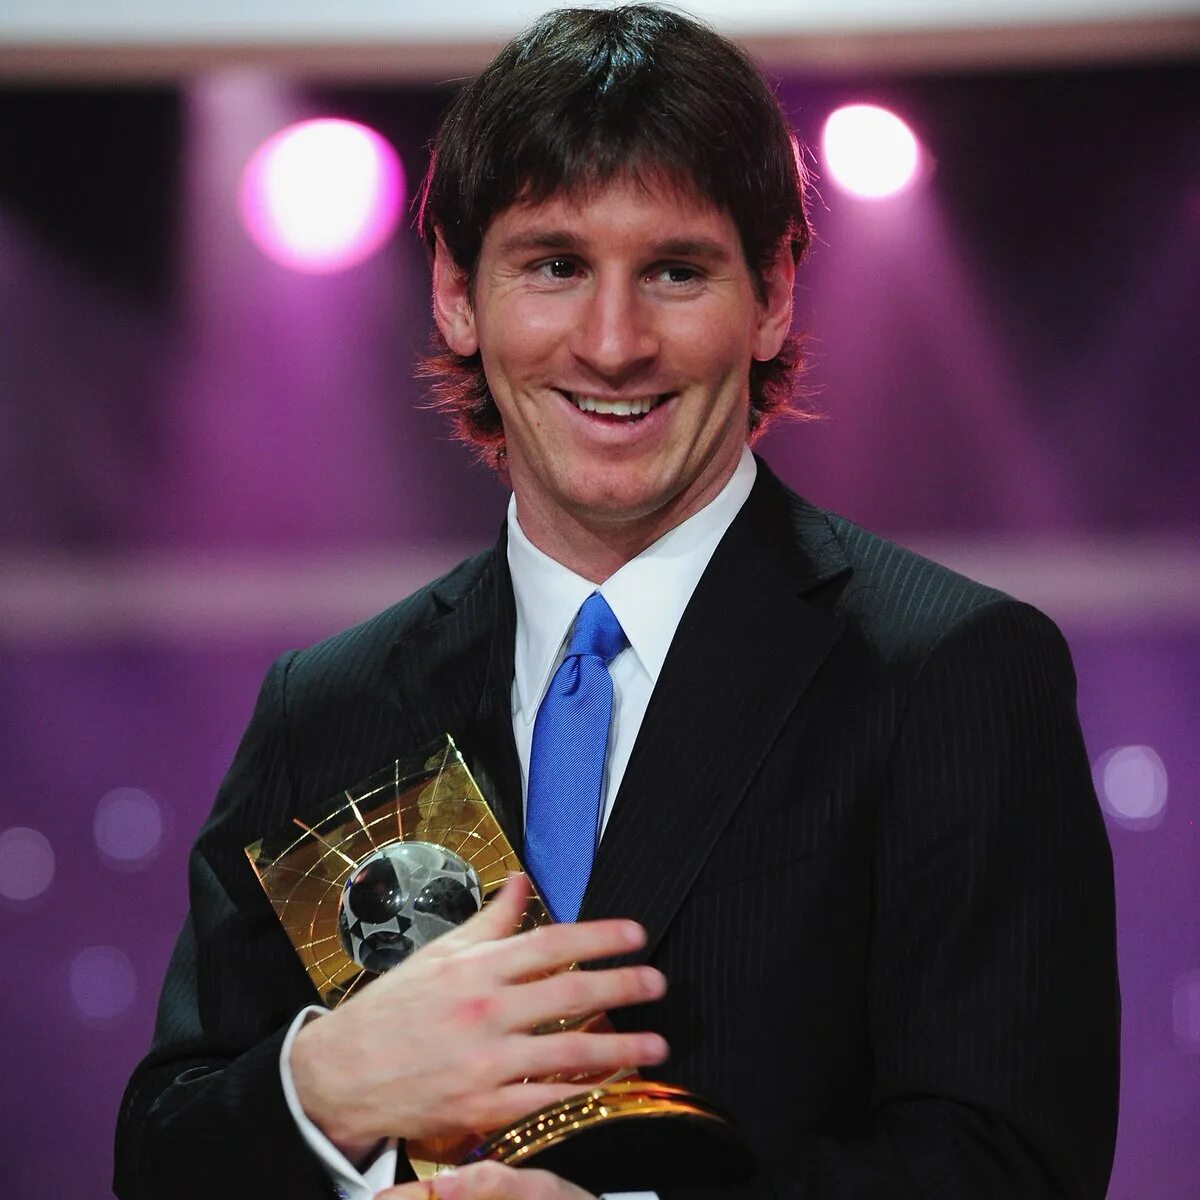 Лео Месси. “Player of the year 2009” Messi. Месси золотой мяч 2012. Лучший игрок. Player of the year